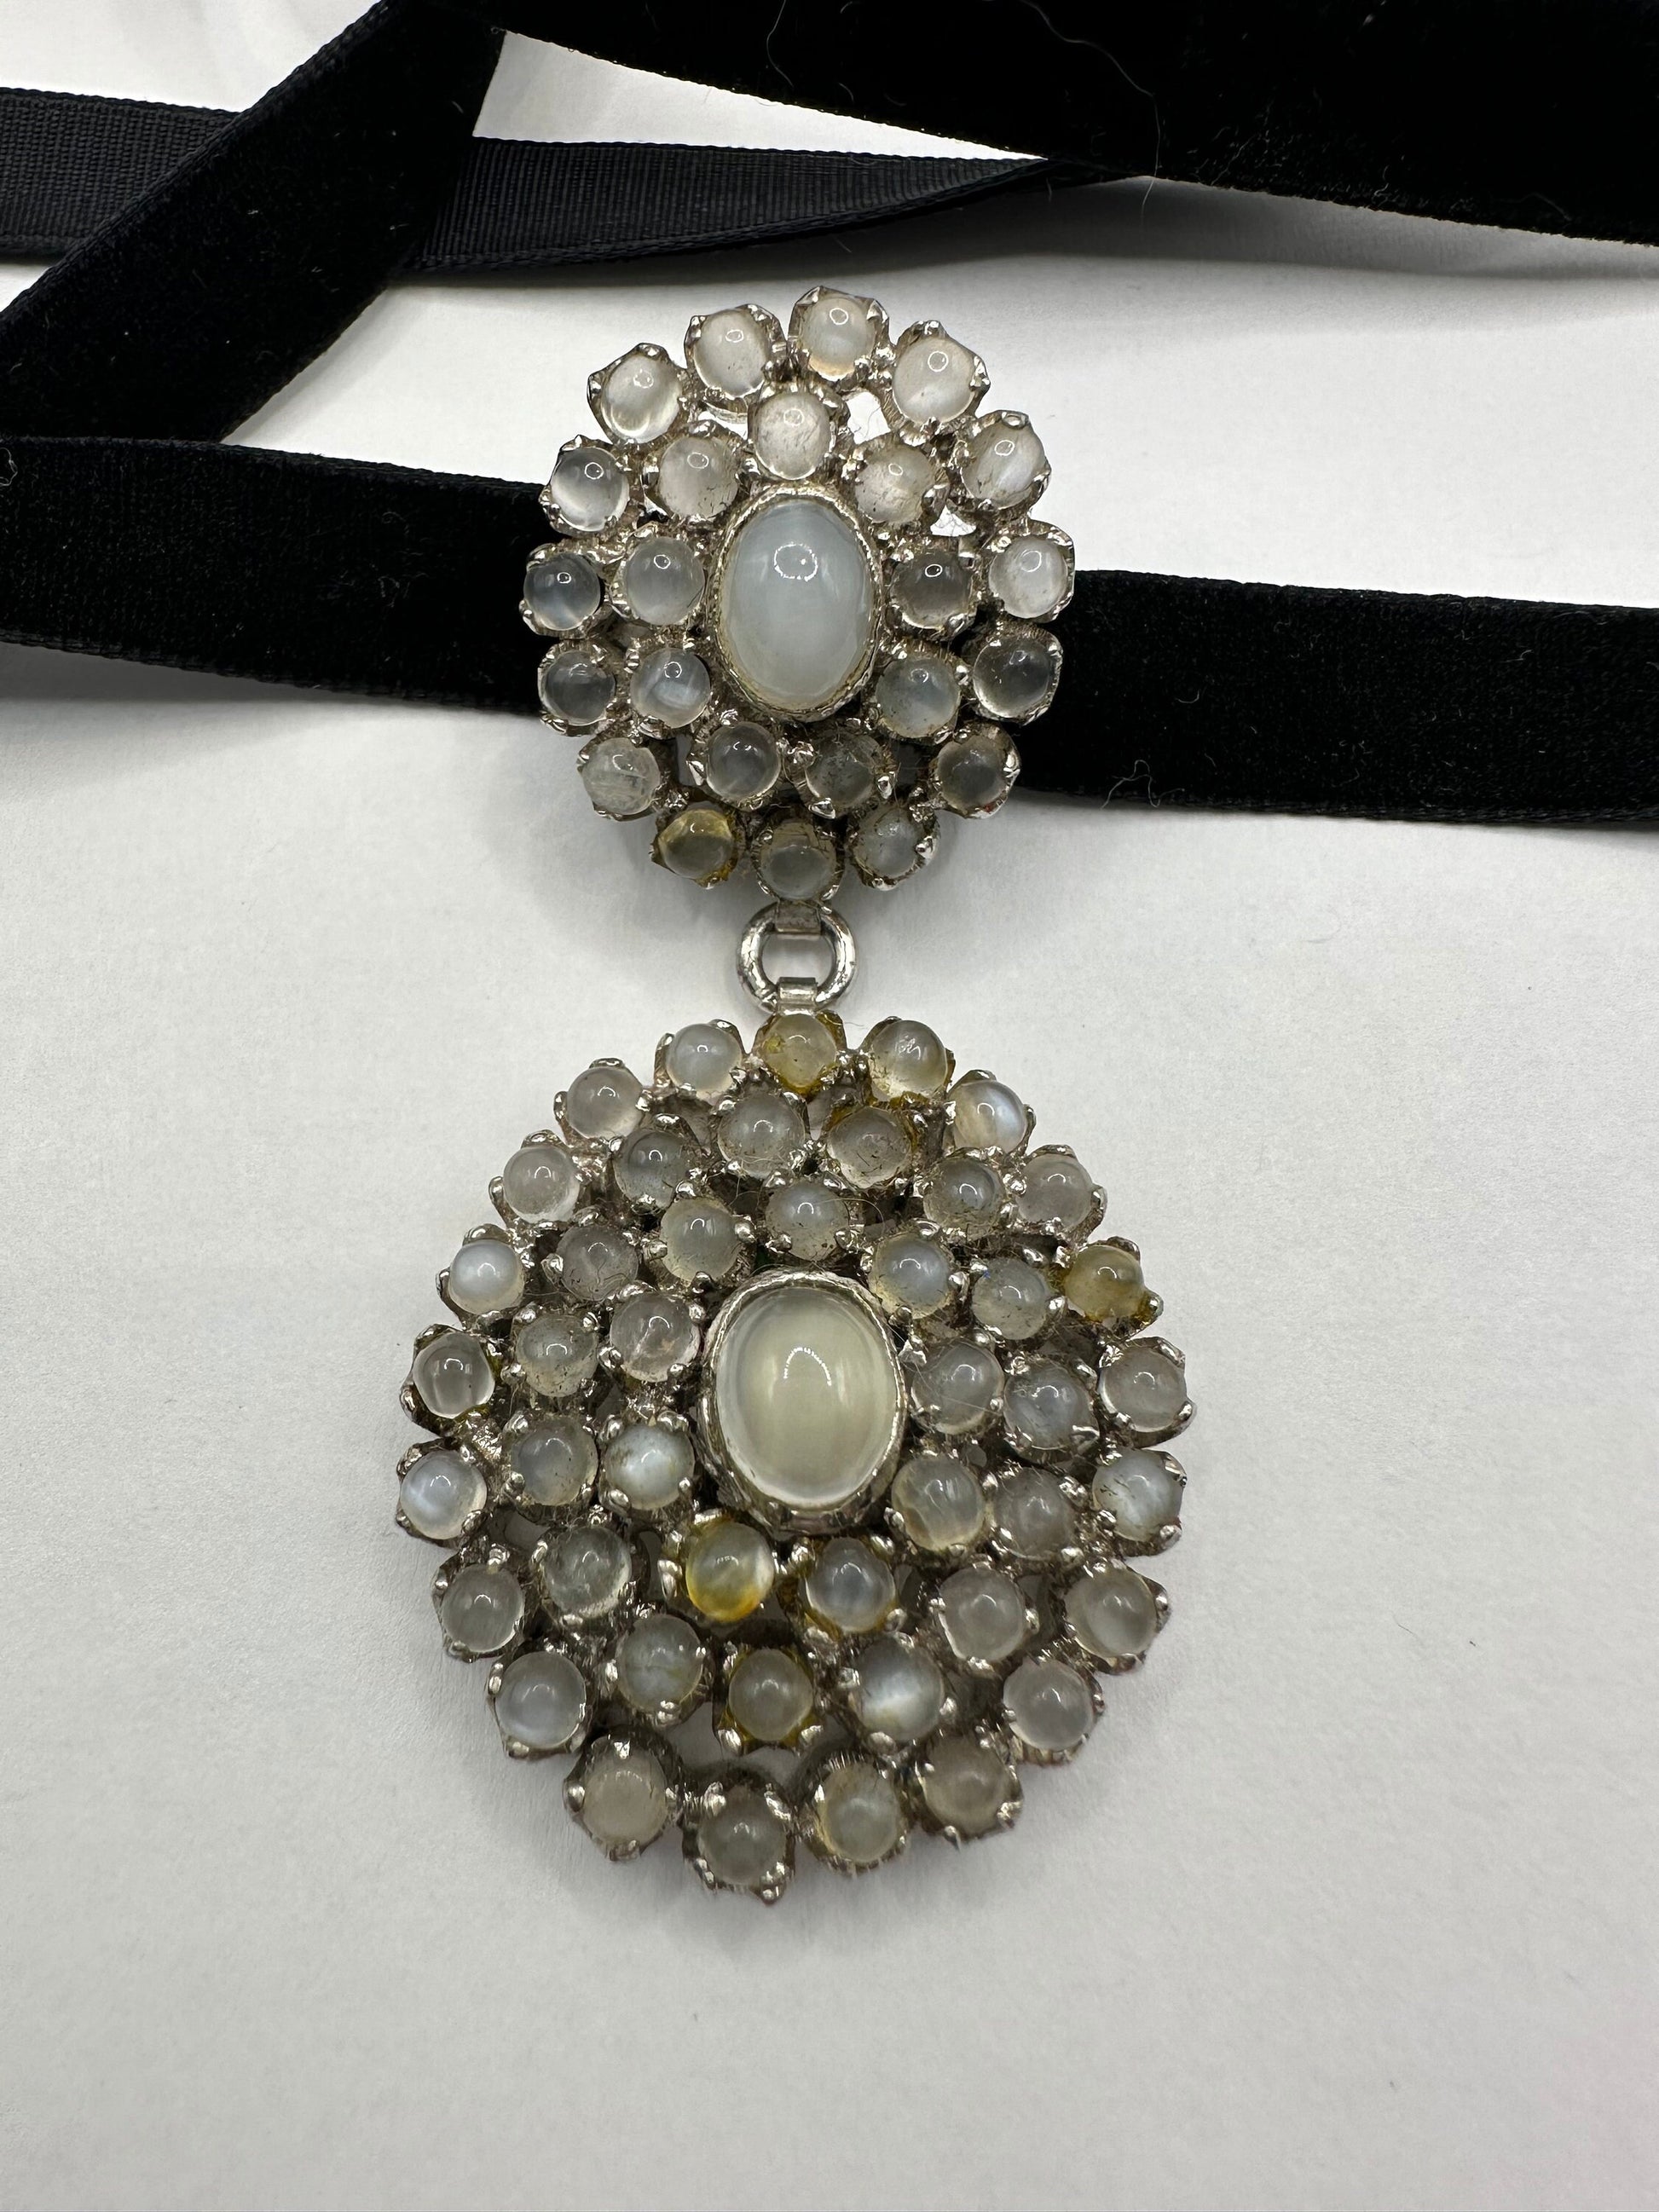 Vintage 925 Sterling Silver Moonstone Pendant Necklace Choker